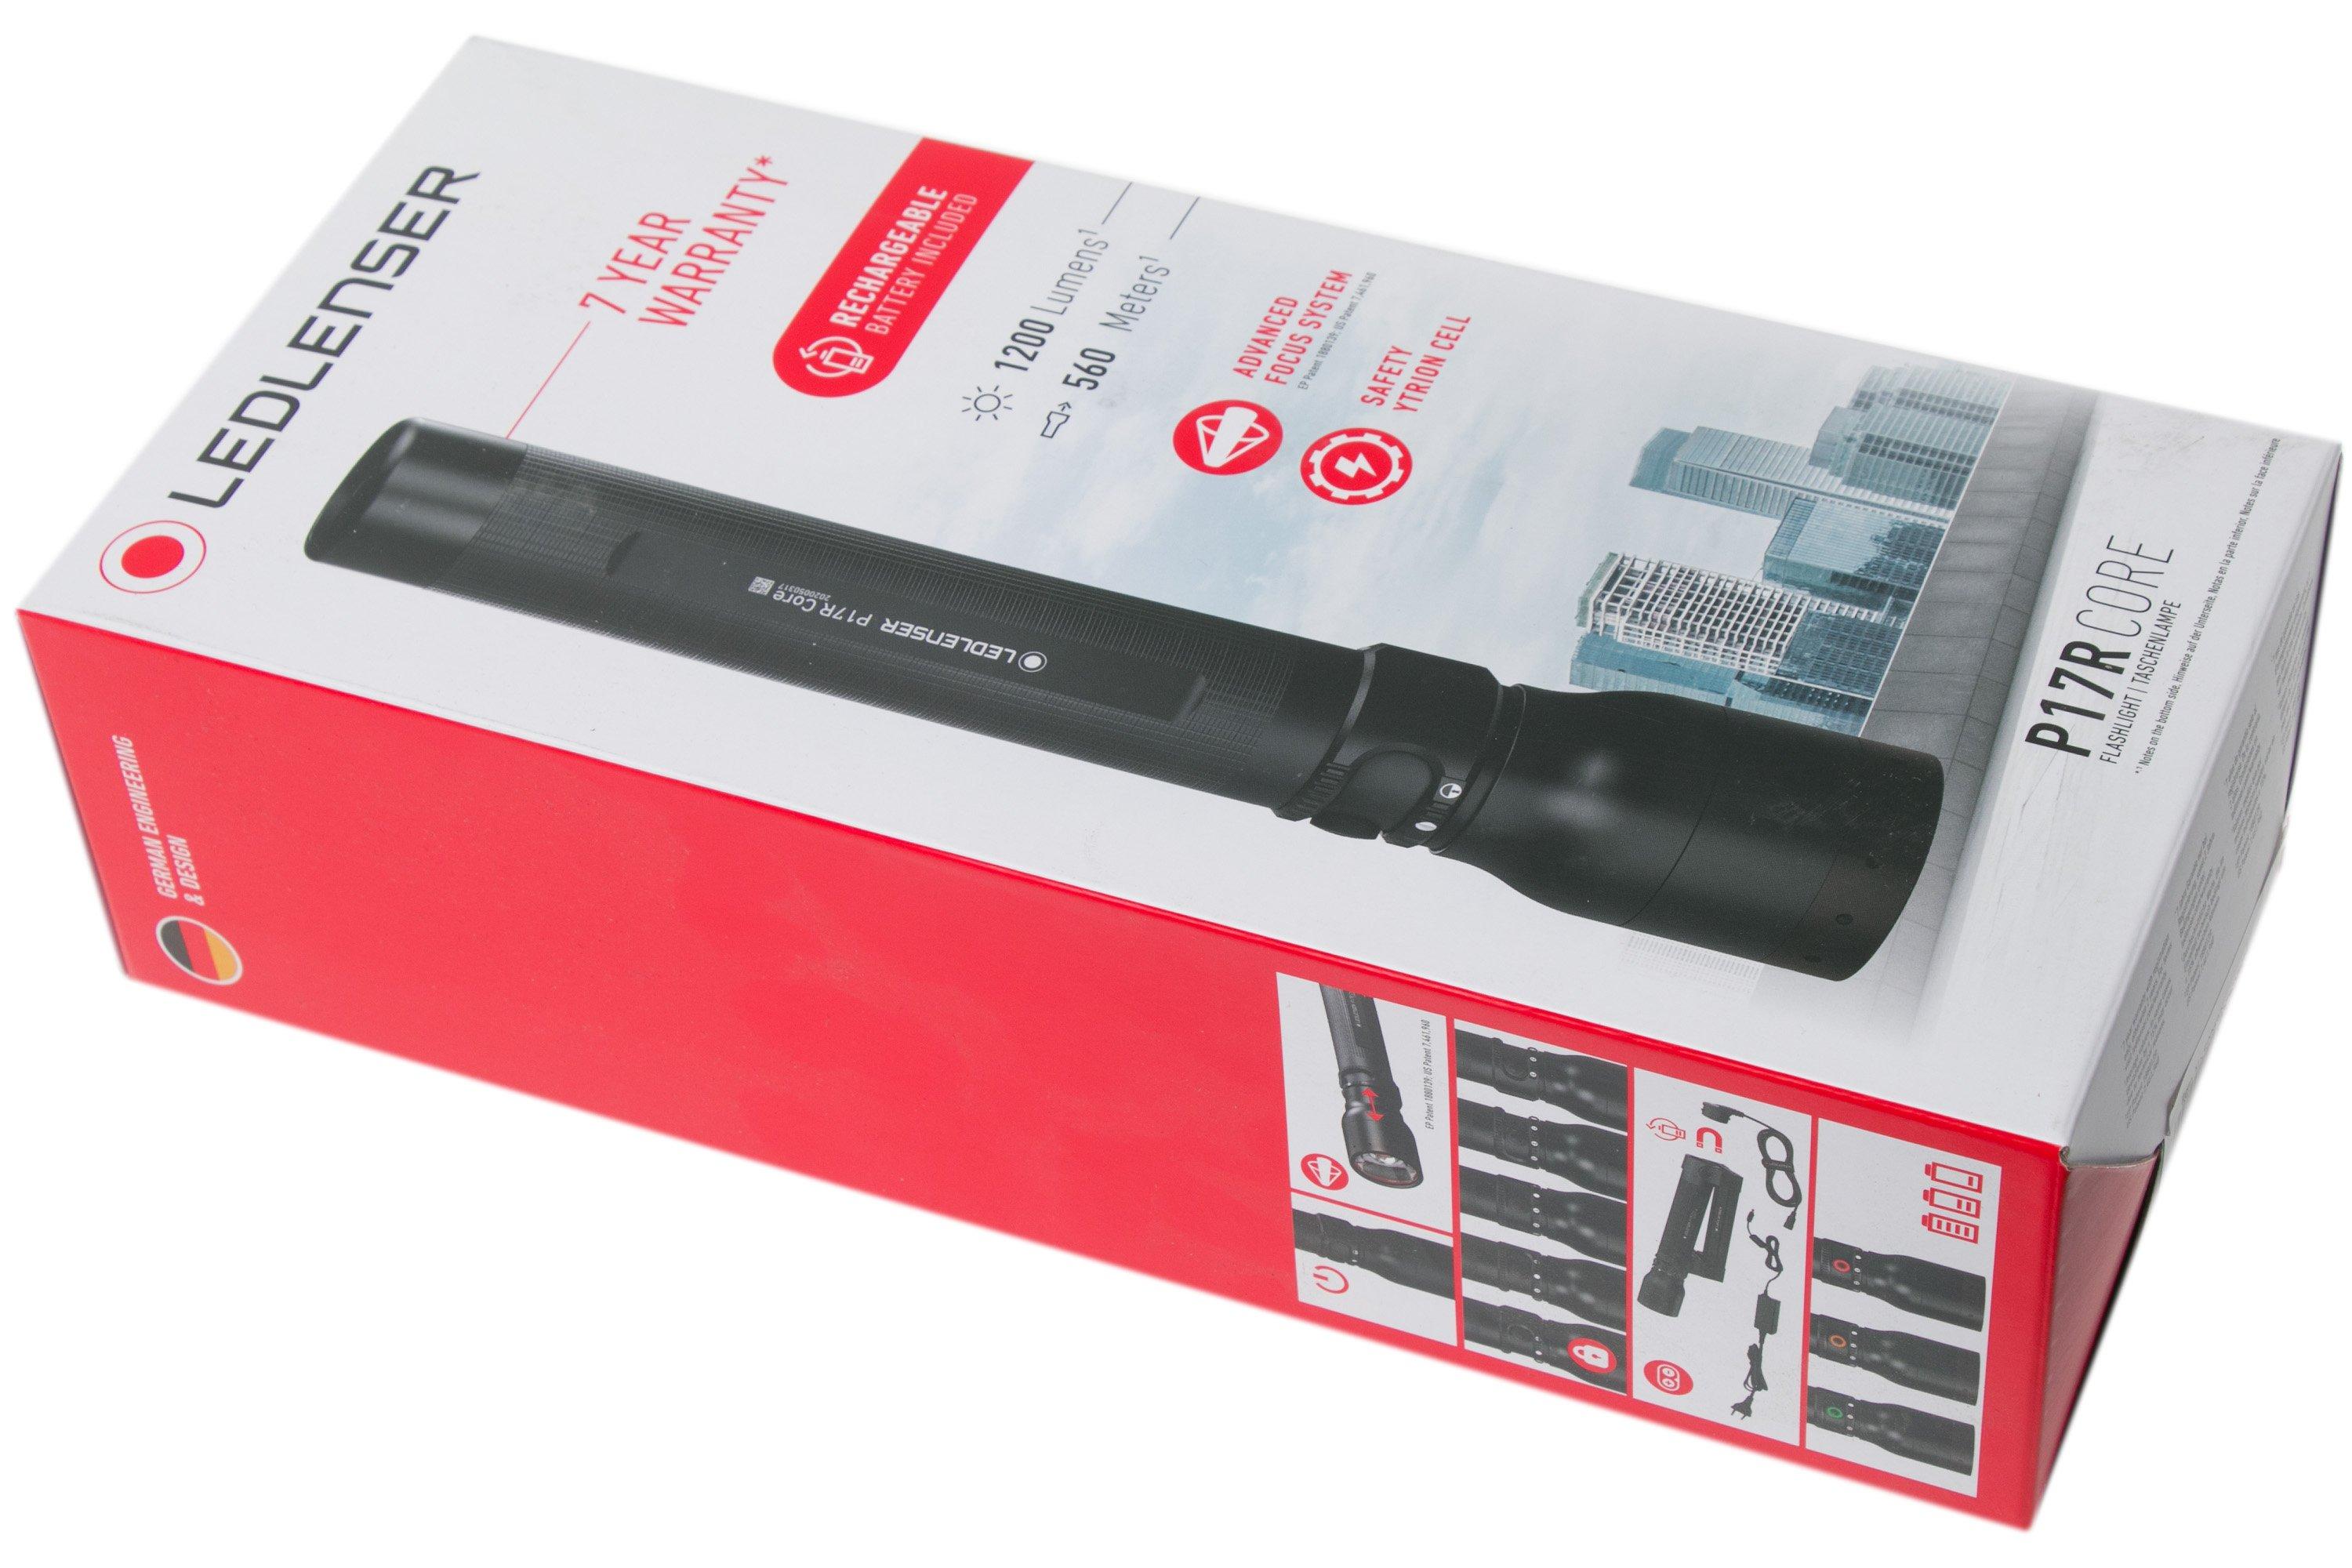 P17R Core flashlight | Advantageously shopping at